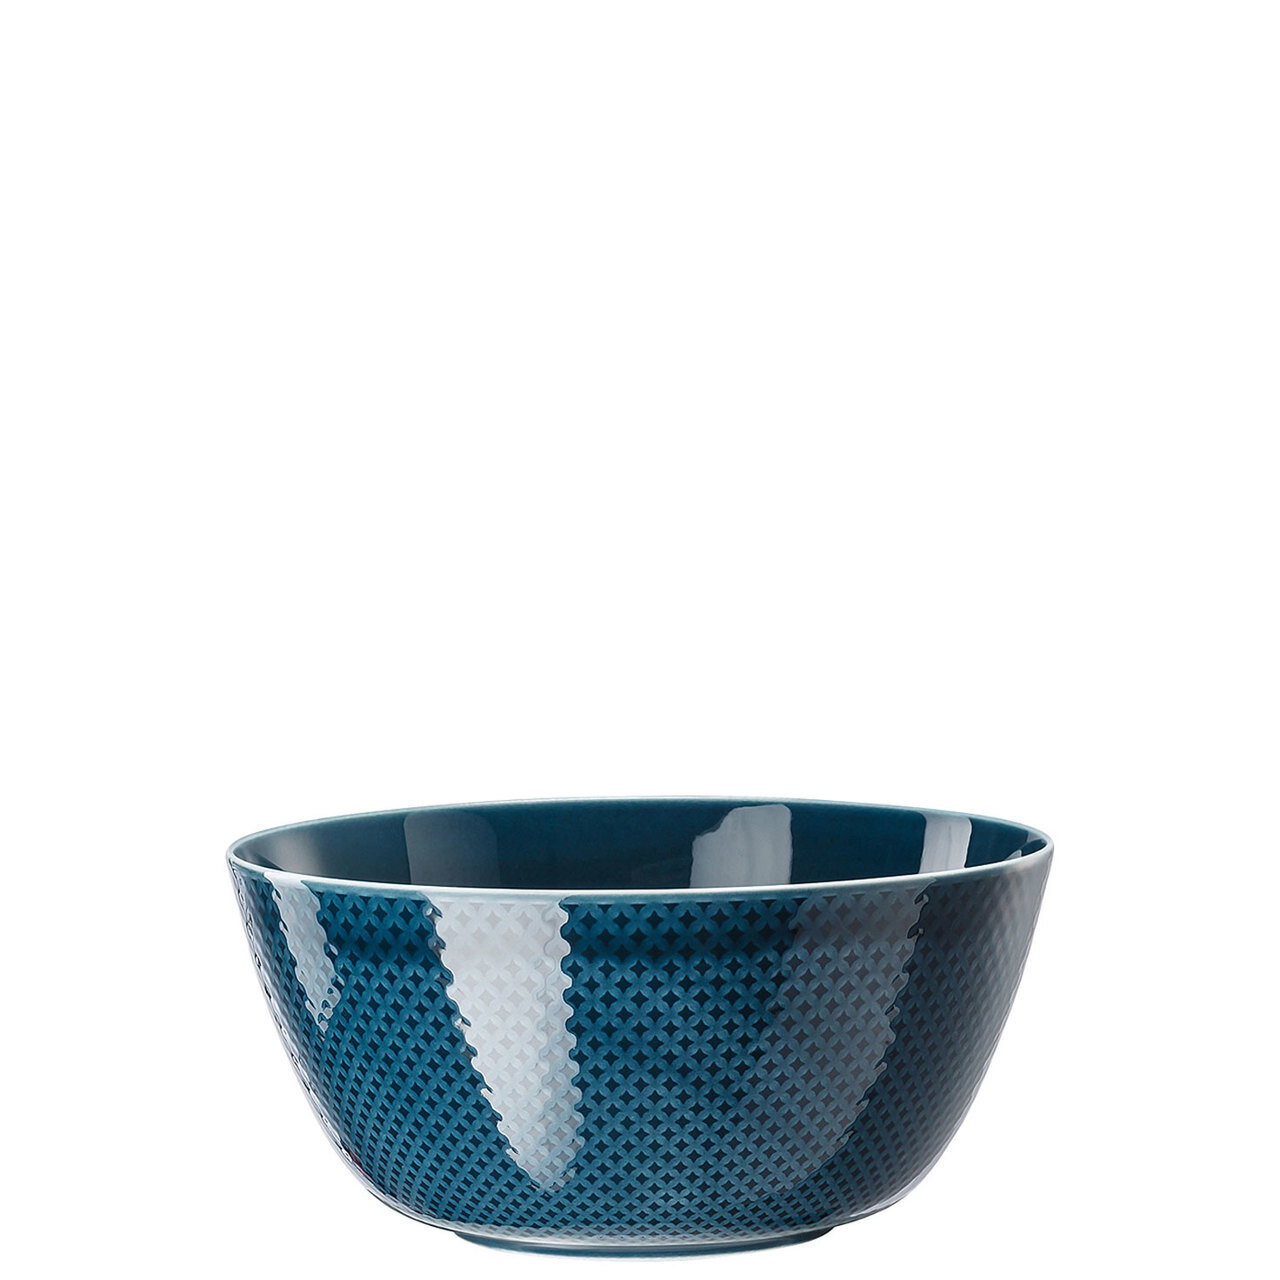 Rosenthal Junto Ocean Blue Bowl 8 1/2 Inch 78 oz